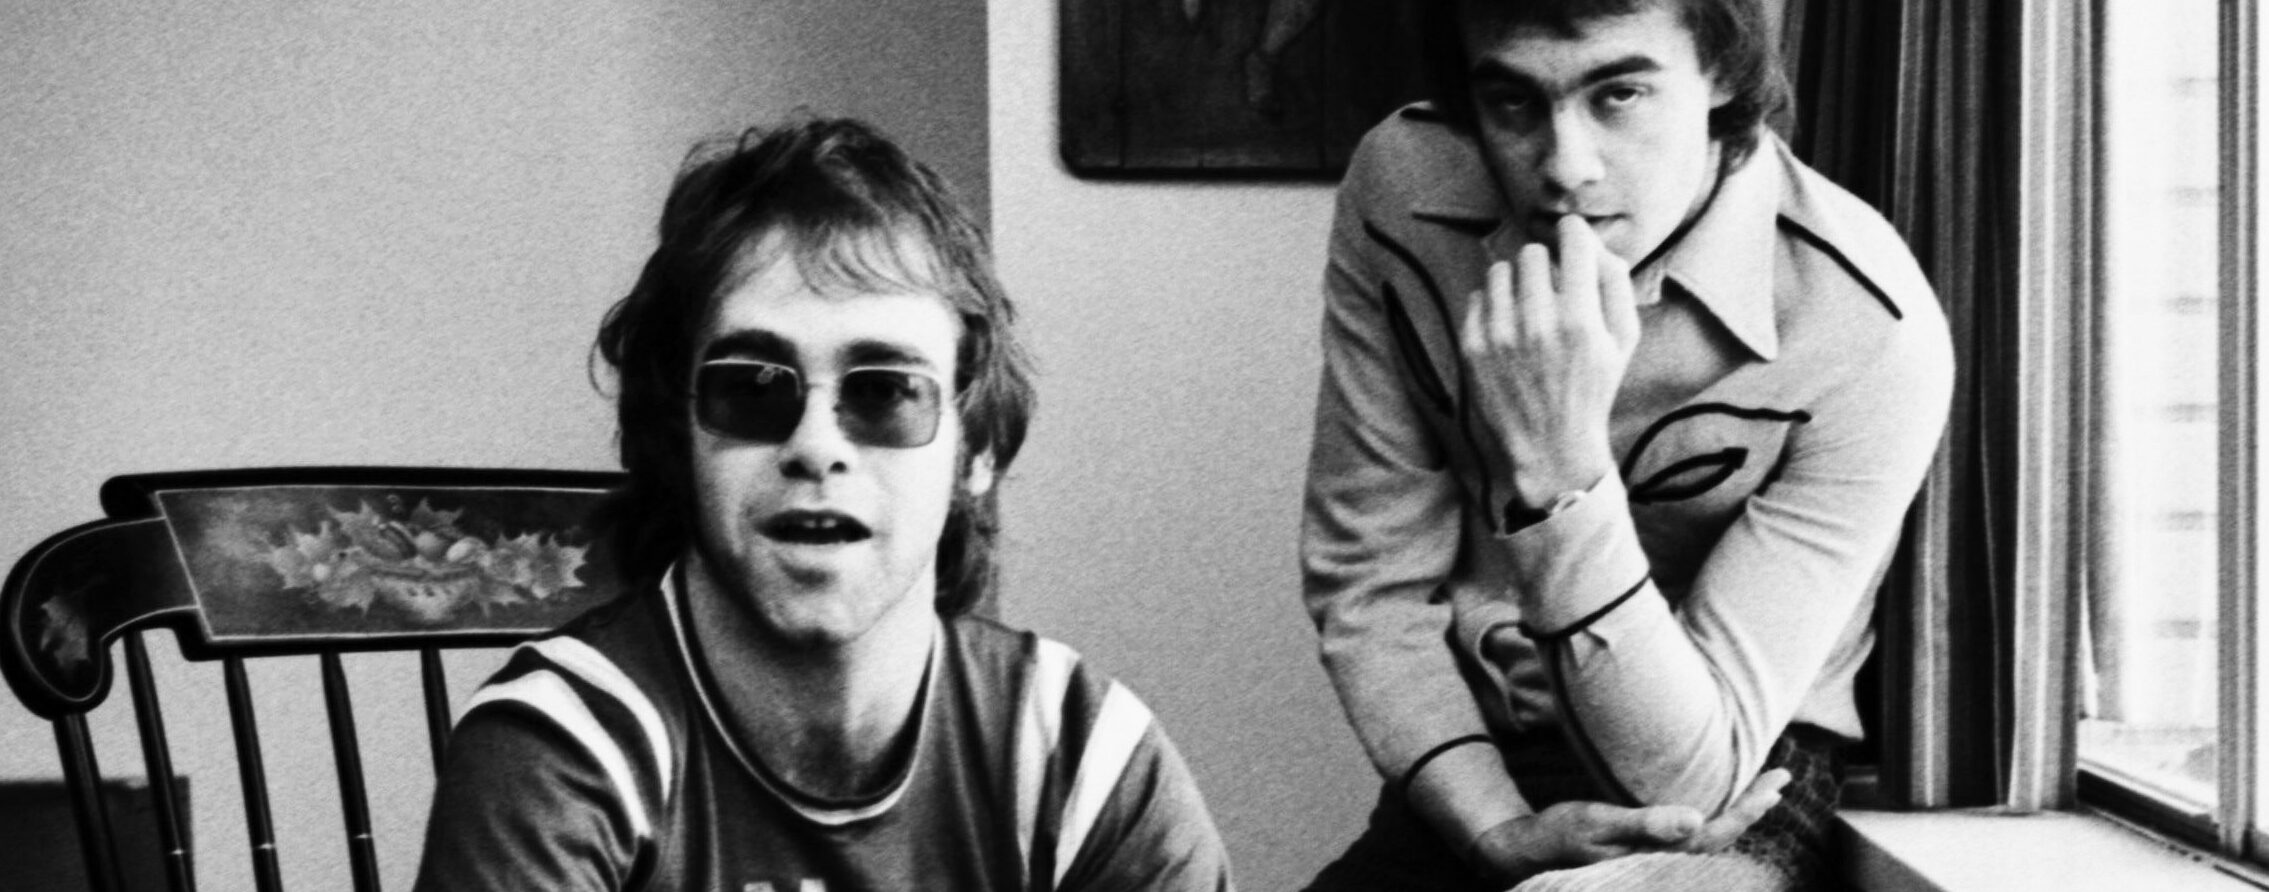 Inside Songwriting: Bernie Taupin, Elton John & the Tumbleweed Truth